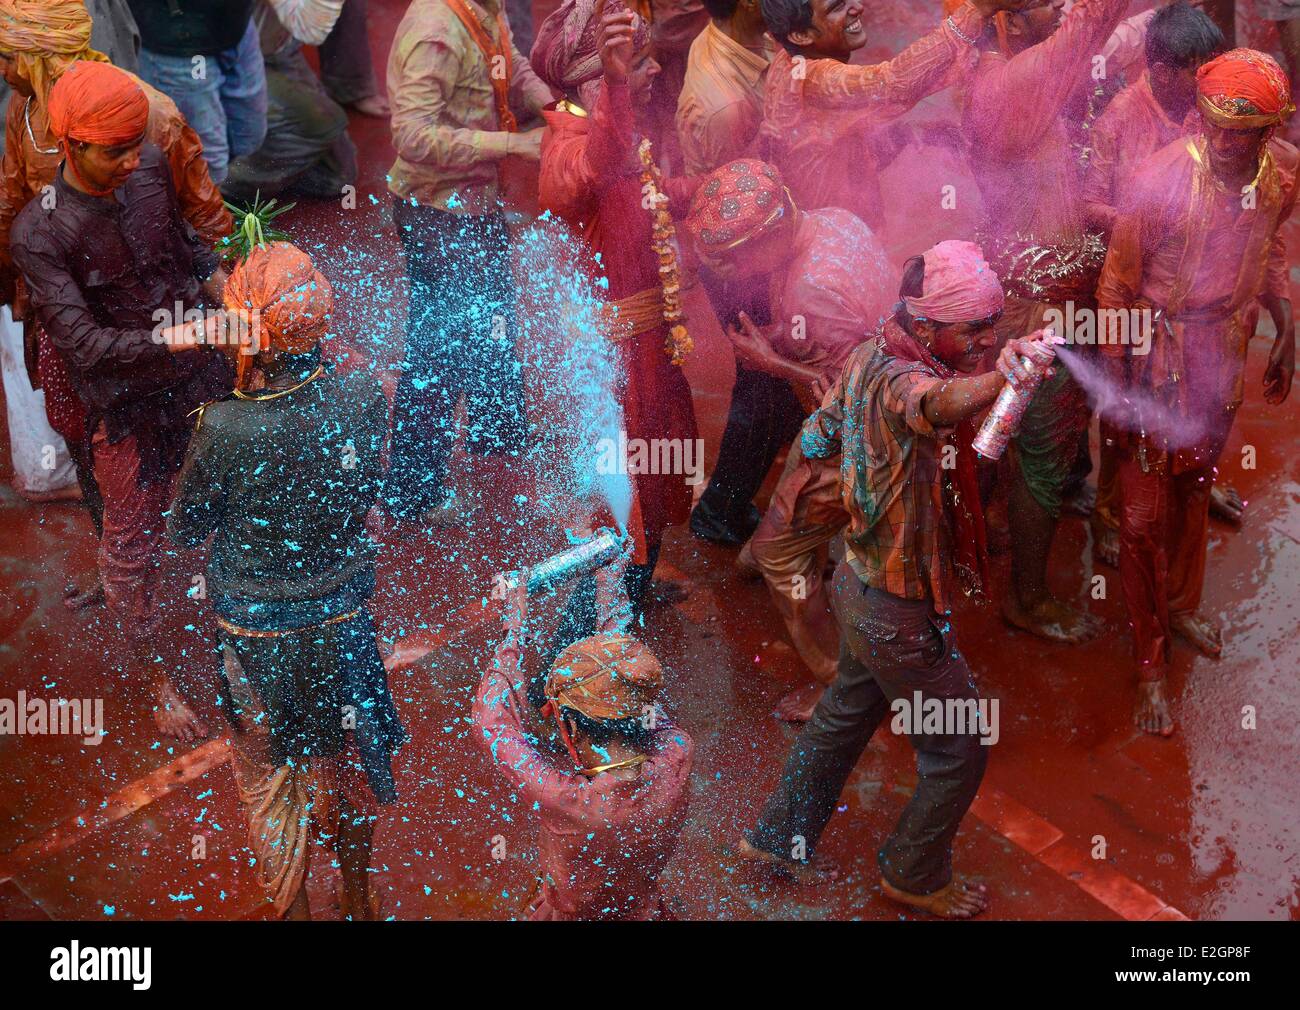 India Uttar Pradesh State in Barsana temple people receive coloured powder during Holi festival celebrations Stock Photo